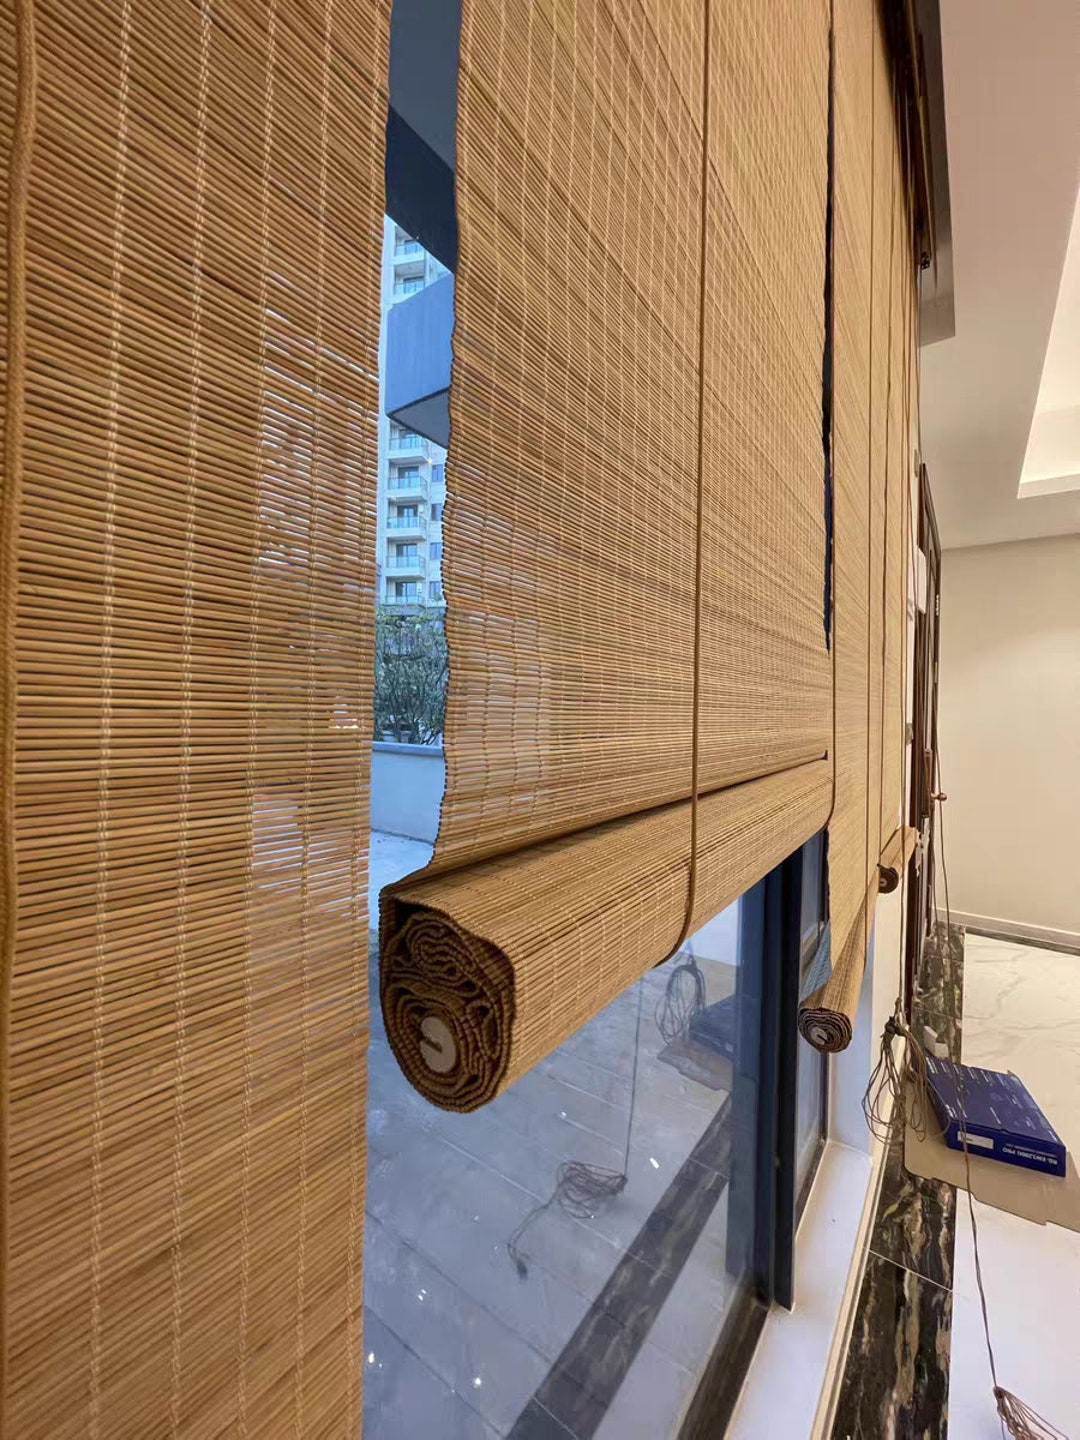 Persianas enrollables de bambú para ventanas, parasoles, cortinas de  privacidad, cortinas enrollables filtrantes de luz, persianas de bambú  natural